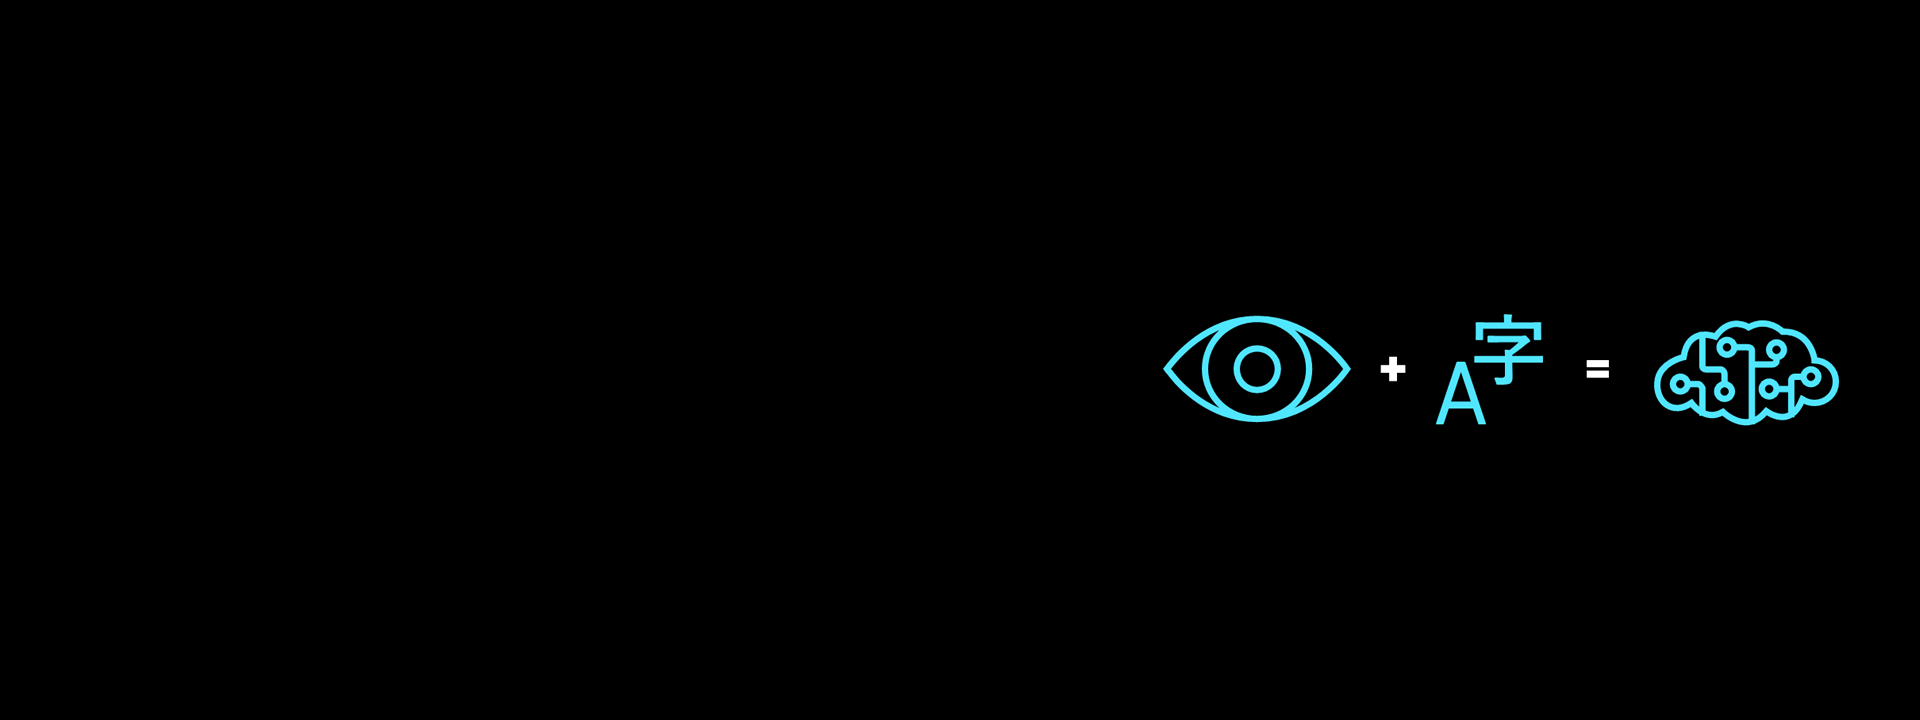 Azure Florence project header: eye + language = AI represents visual-language learning